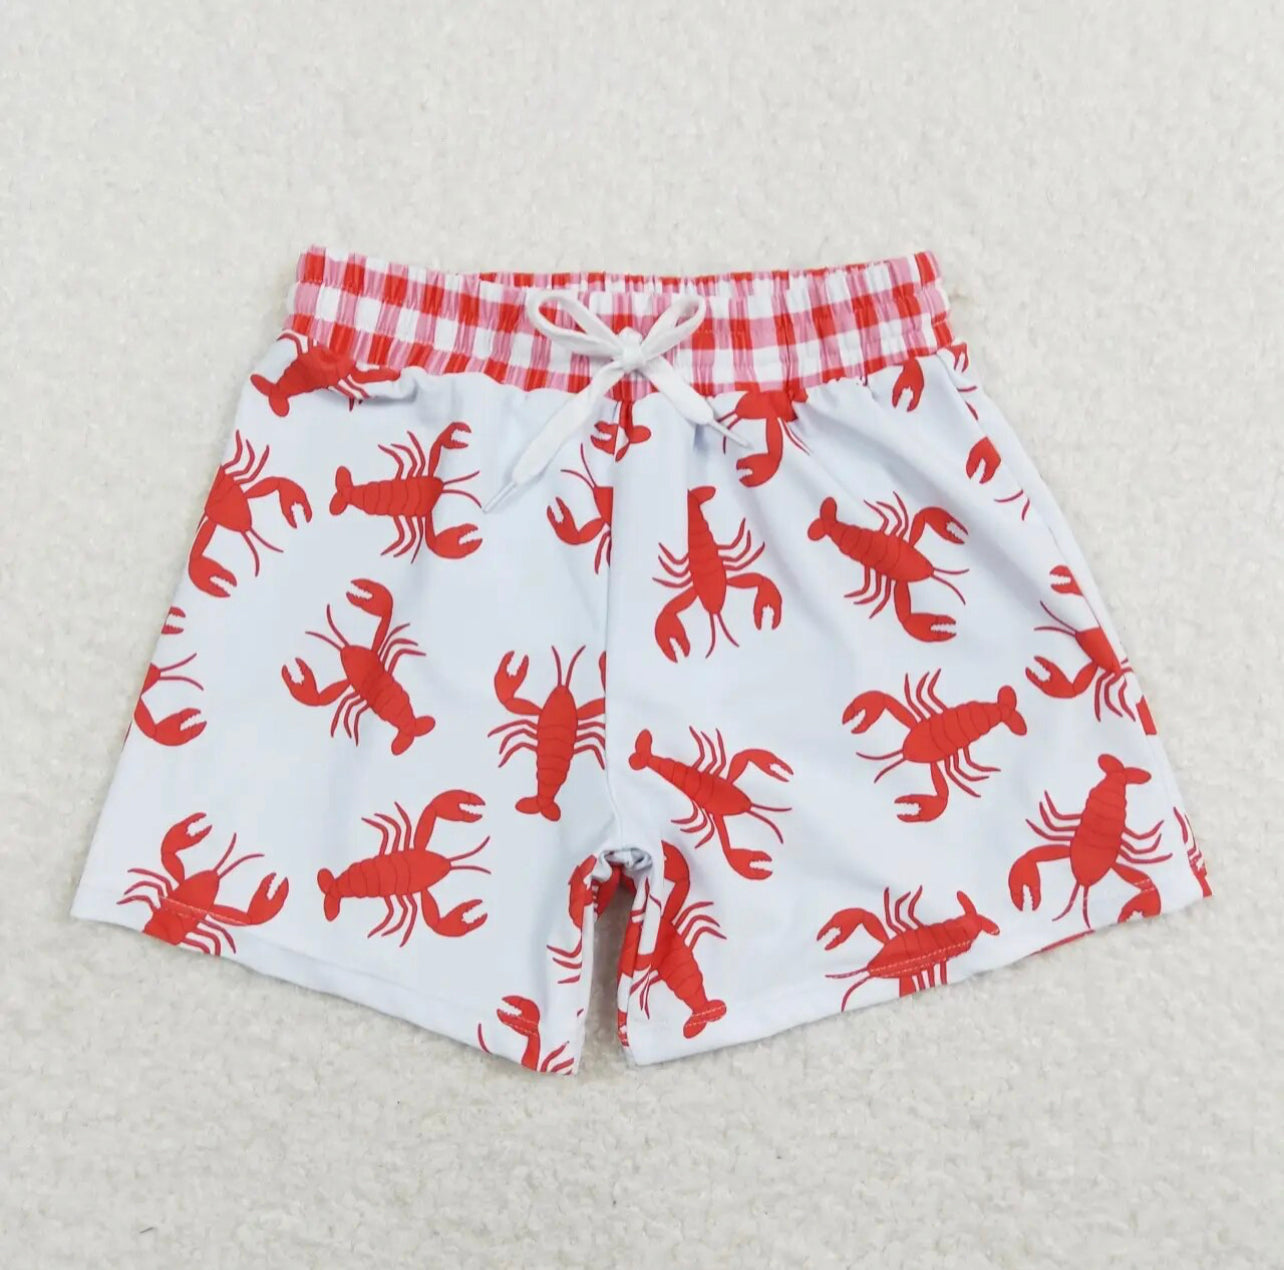 Kids Lobster Swim Trunks